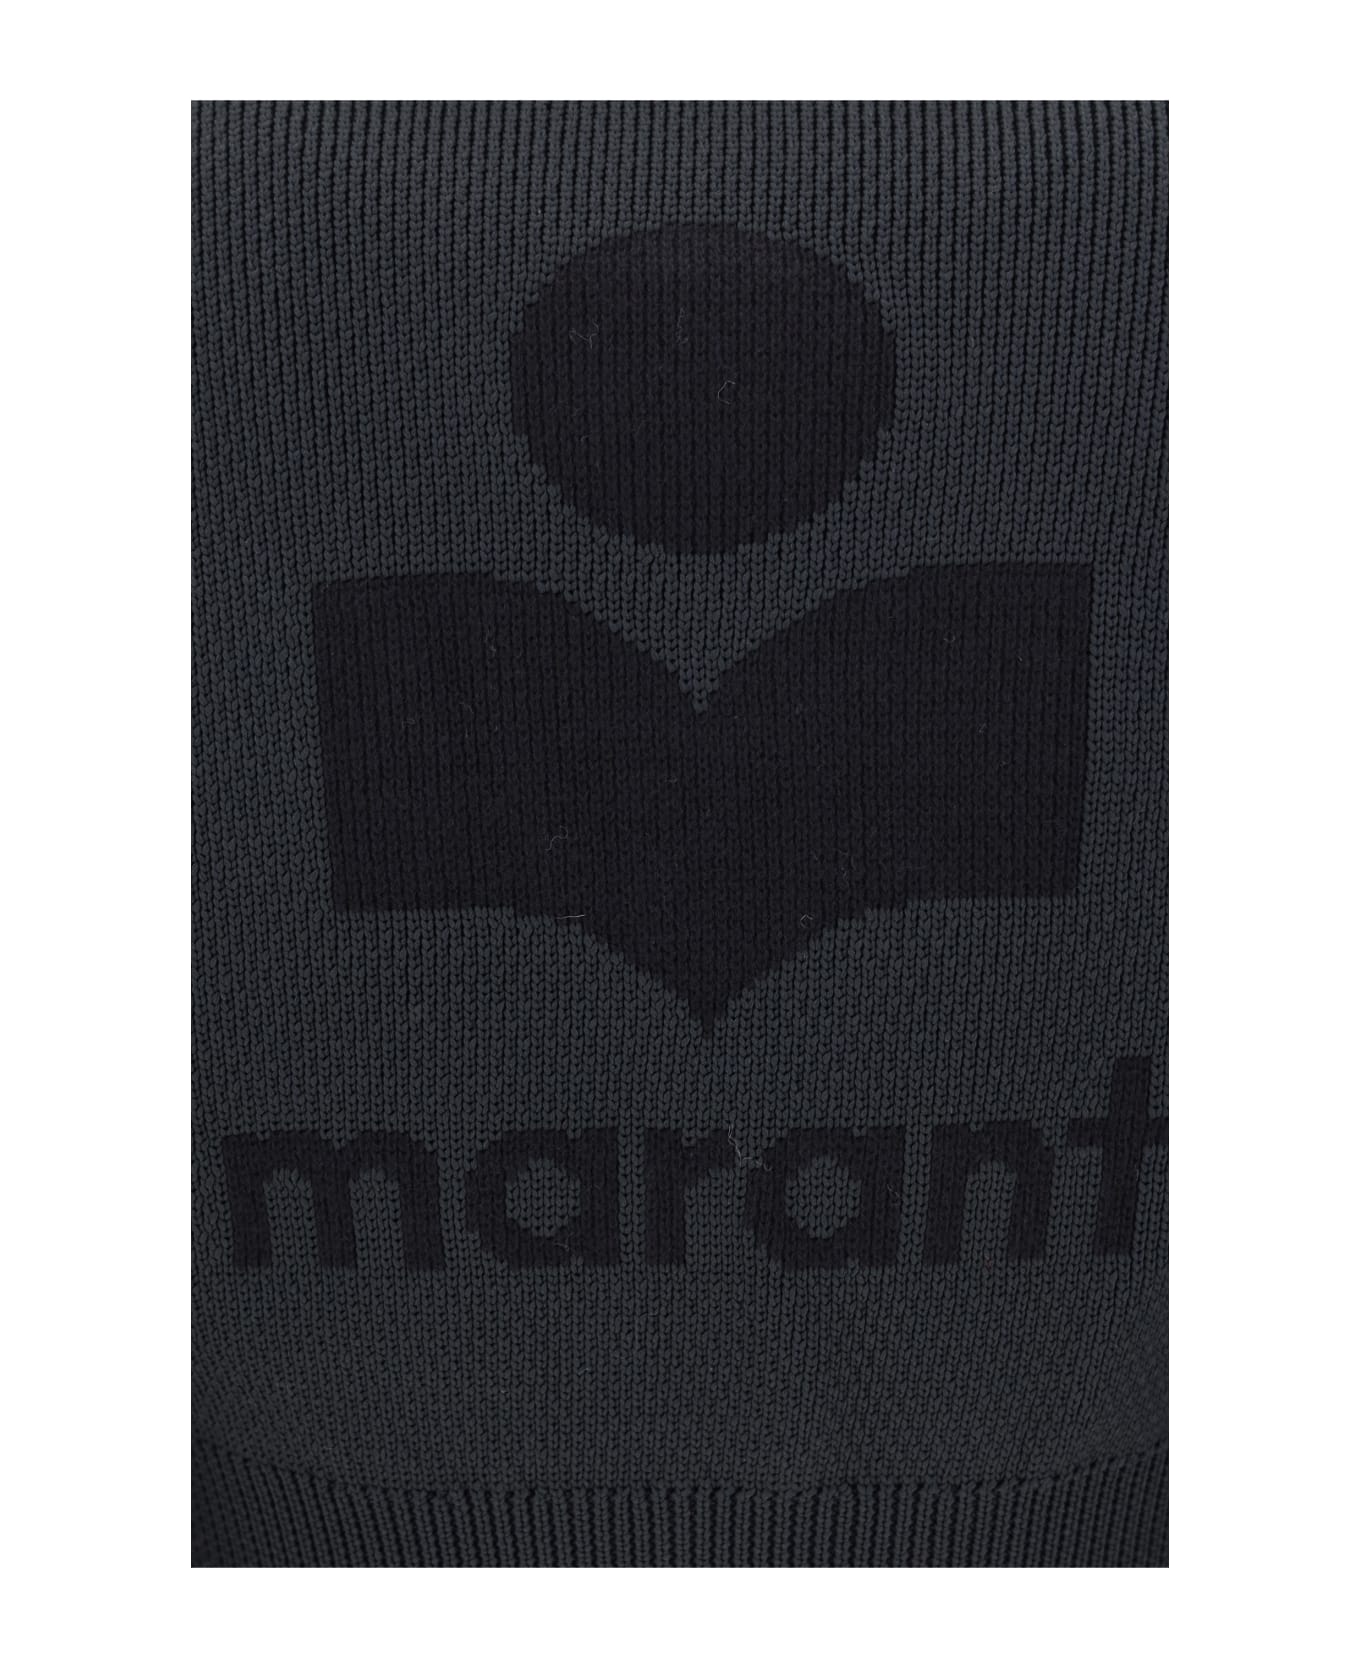 Marant Étoile Oxana Sweatshirt - Black ジャケット